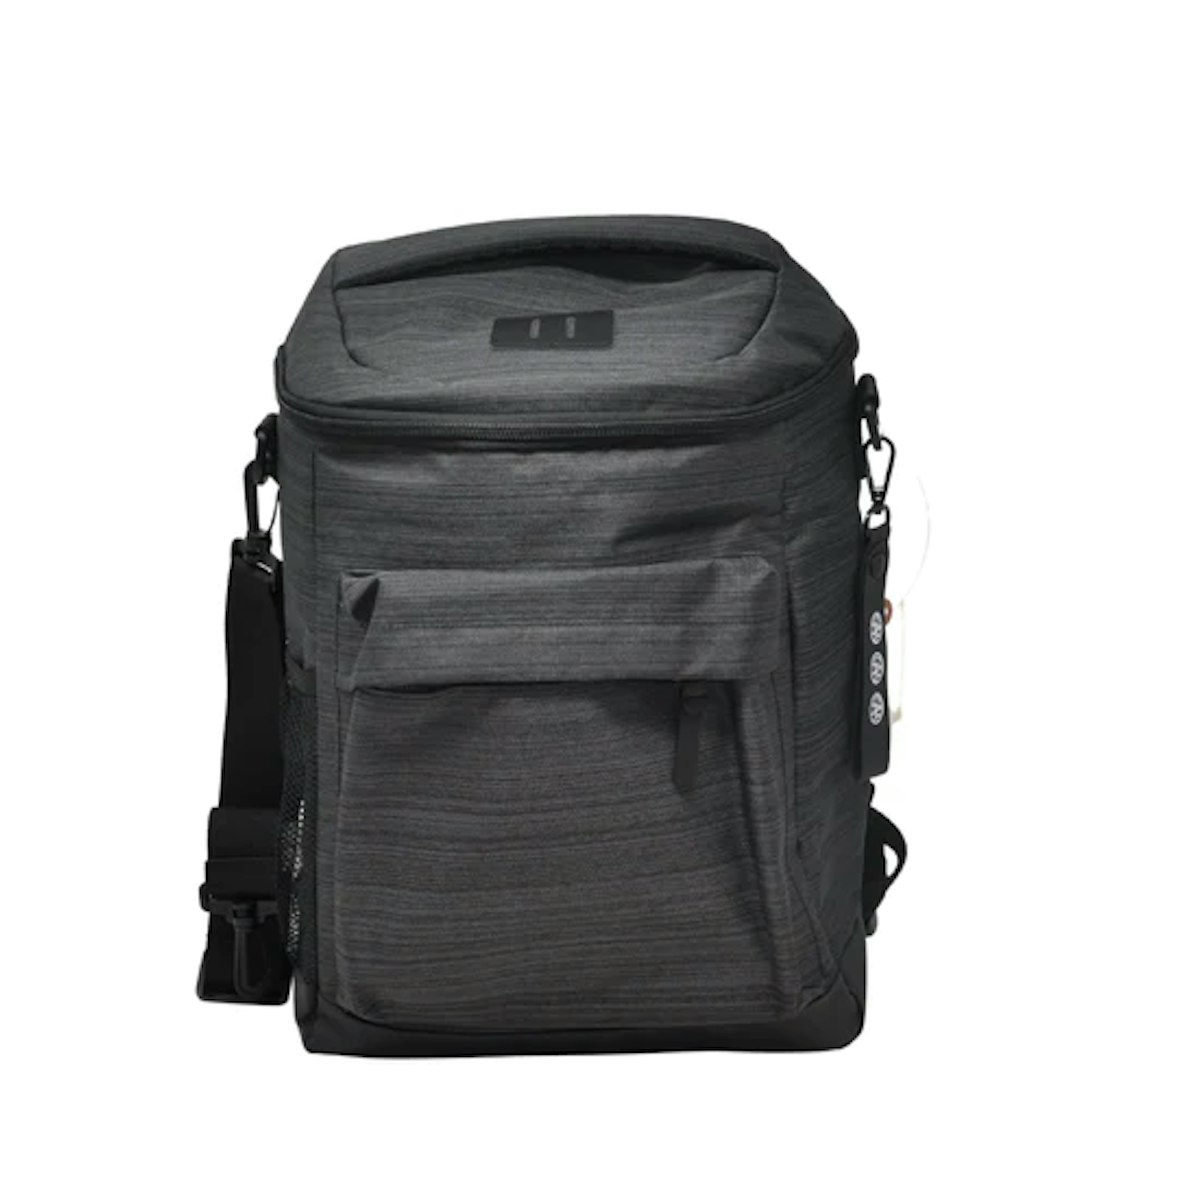 A grey backpack with a shoulder strap and a shoulder strap.